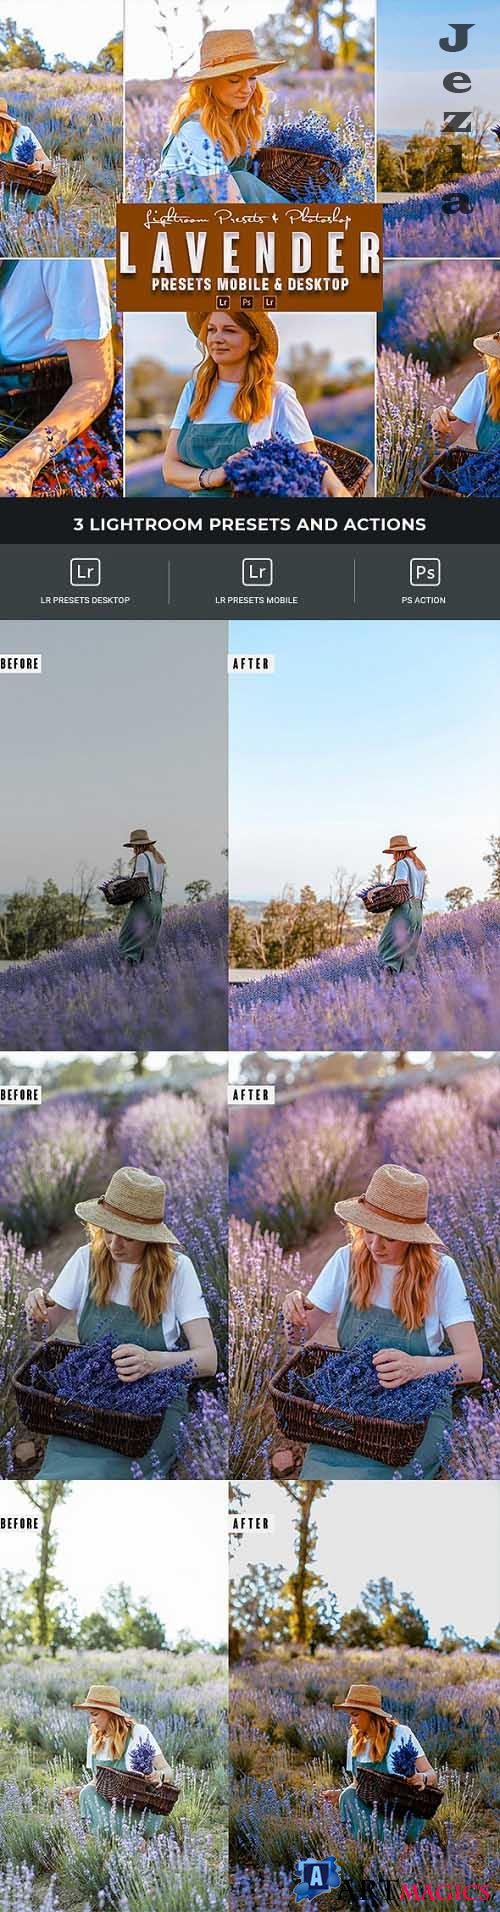 Lavender Photoshop Action & Lightrom Presets - 34858971